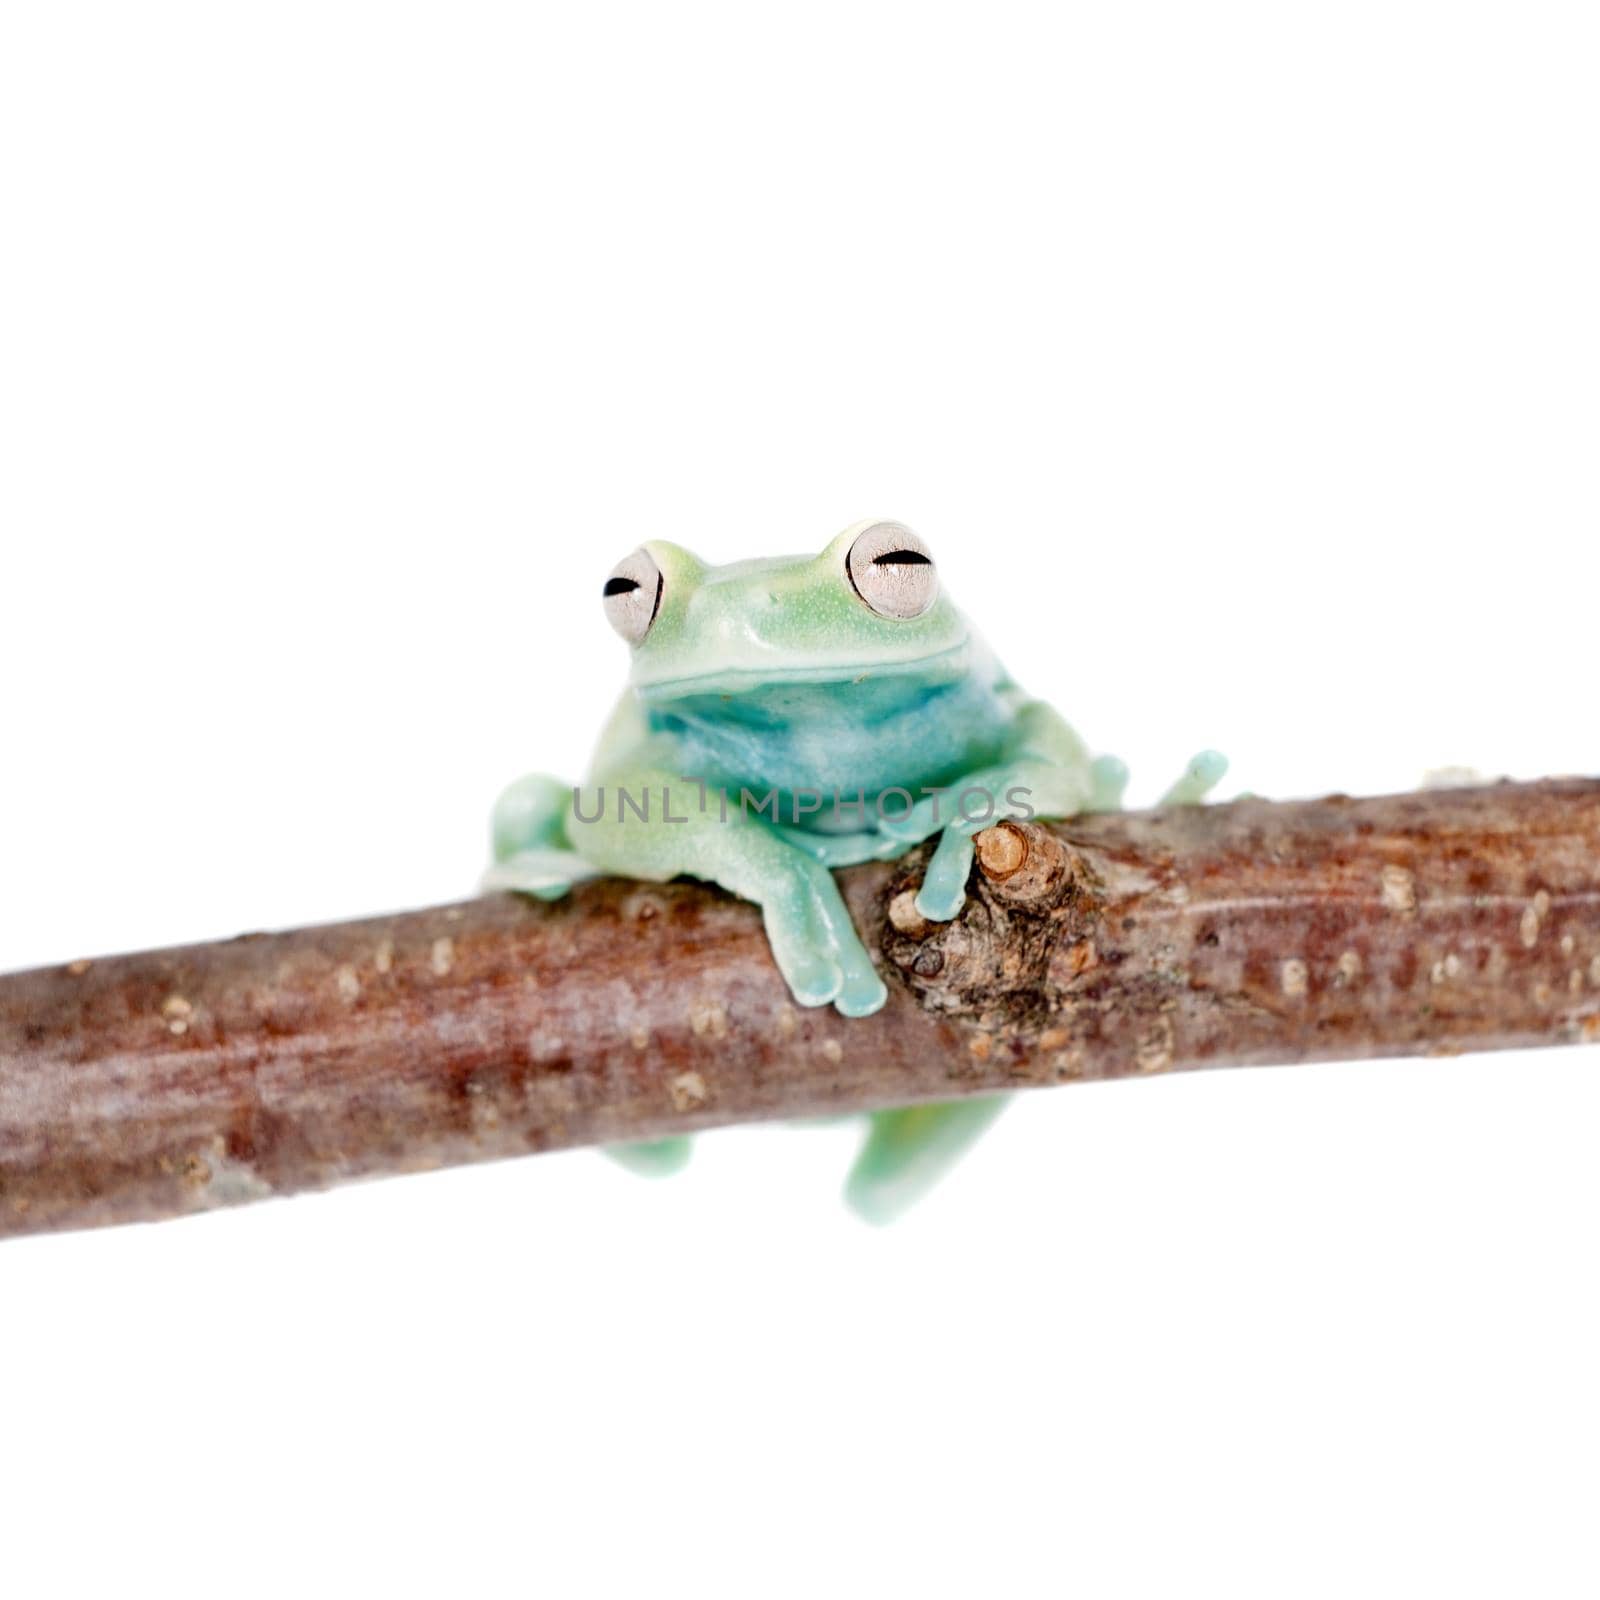 Alytolyla treefrog, Hyloscirtus alytolylax, isolated on white background